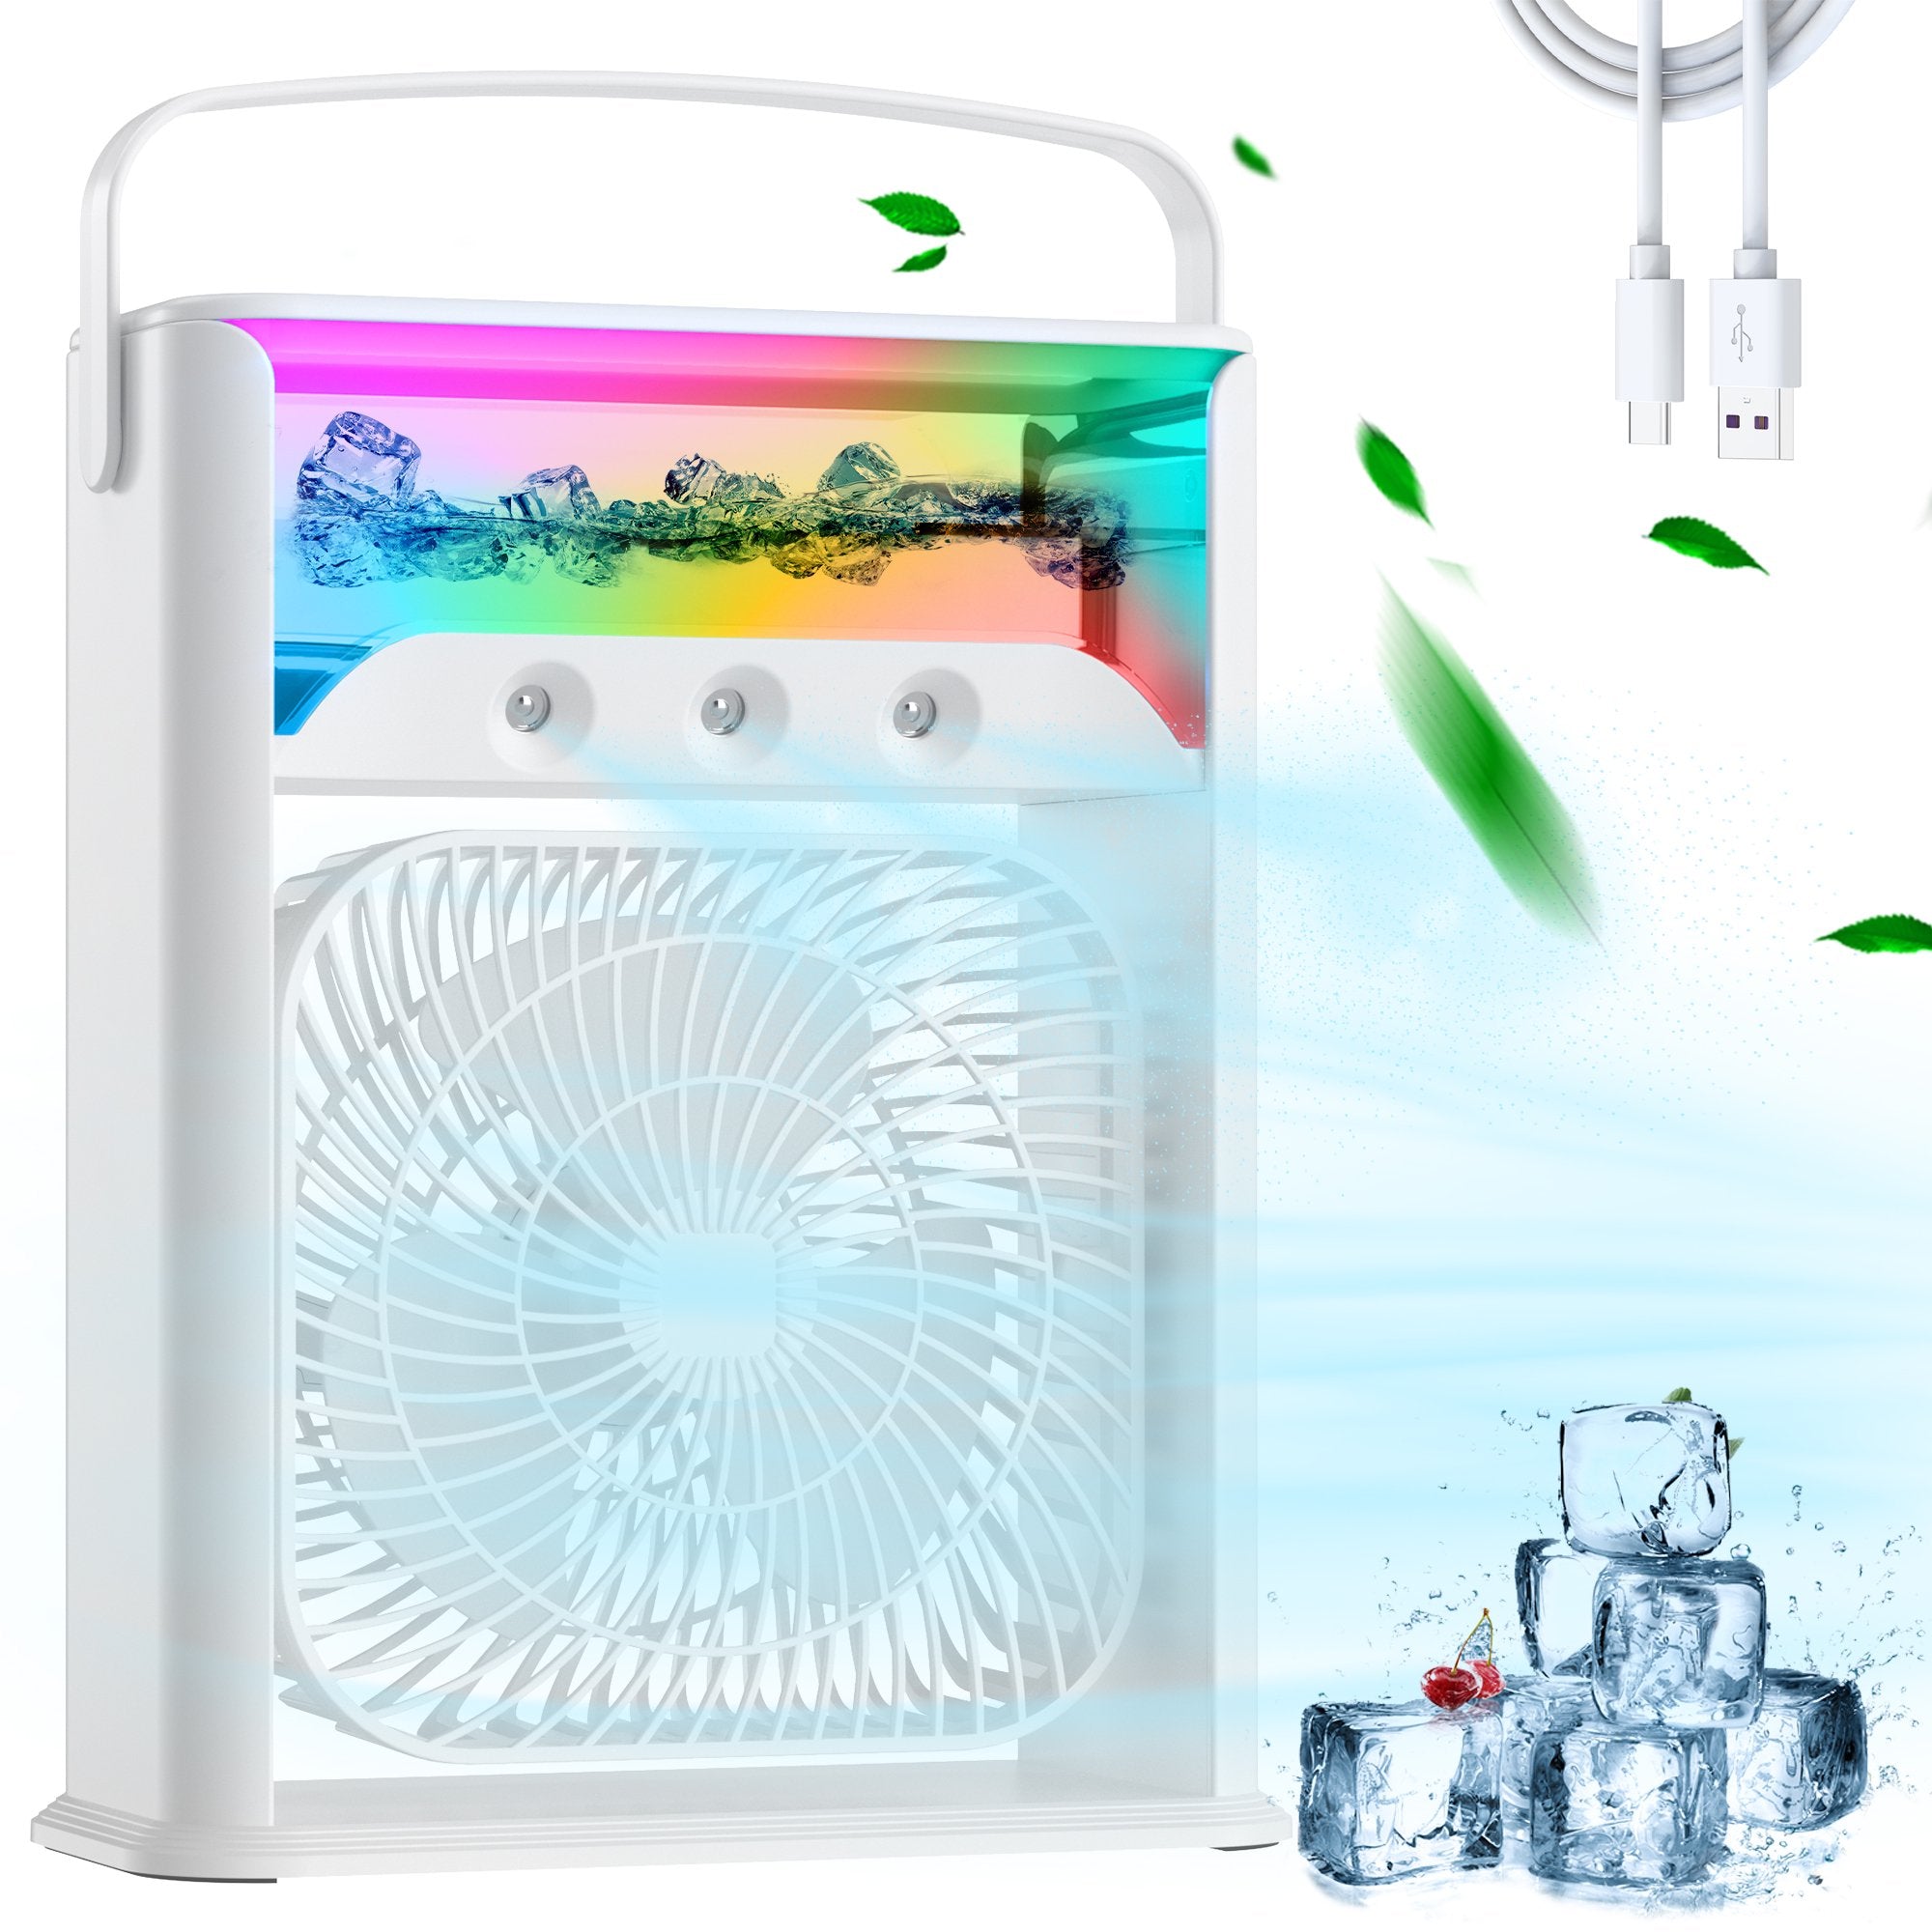 Portable Air Conditioner Fan, Mini Evaporative Desktop Air